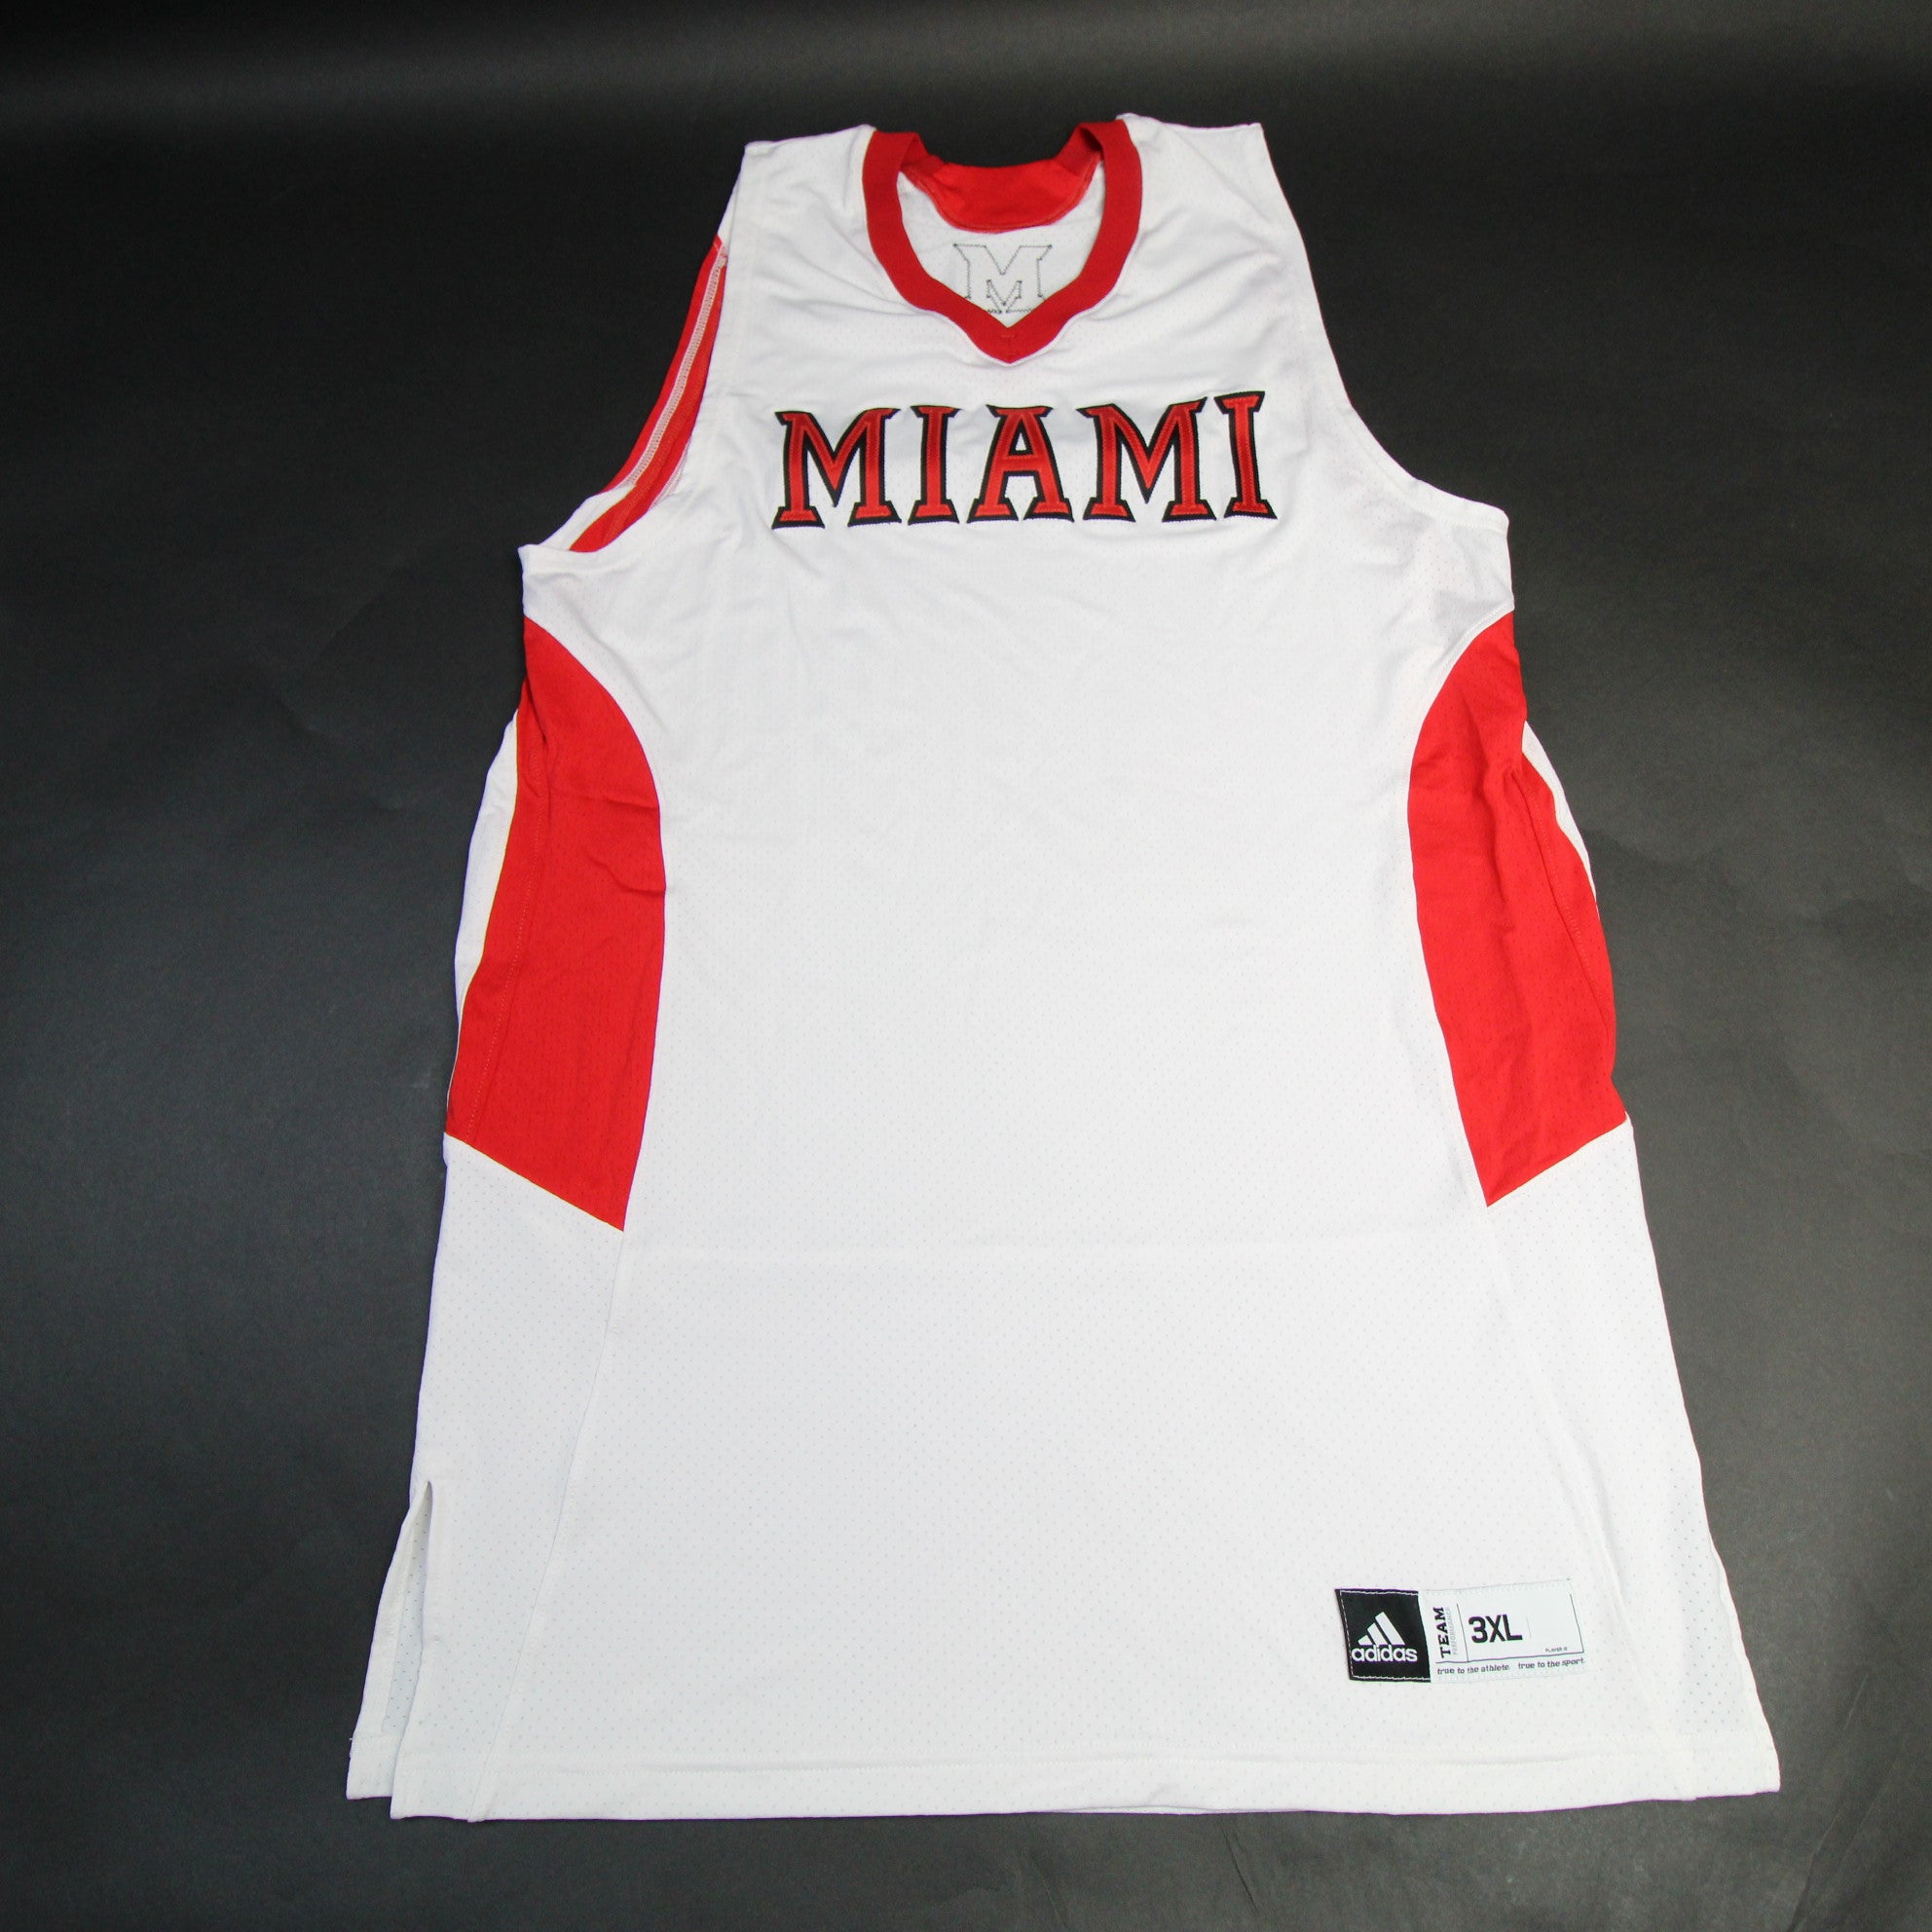 Miami RedHawks adidas Practice Jersey - Basketball Men's Gray